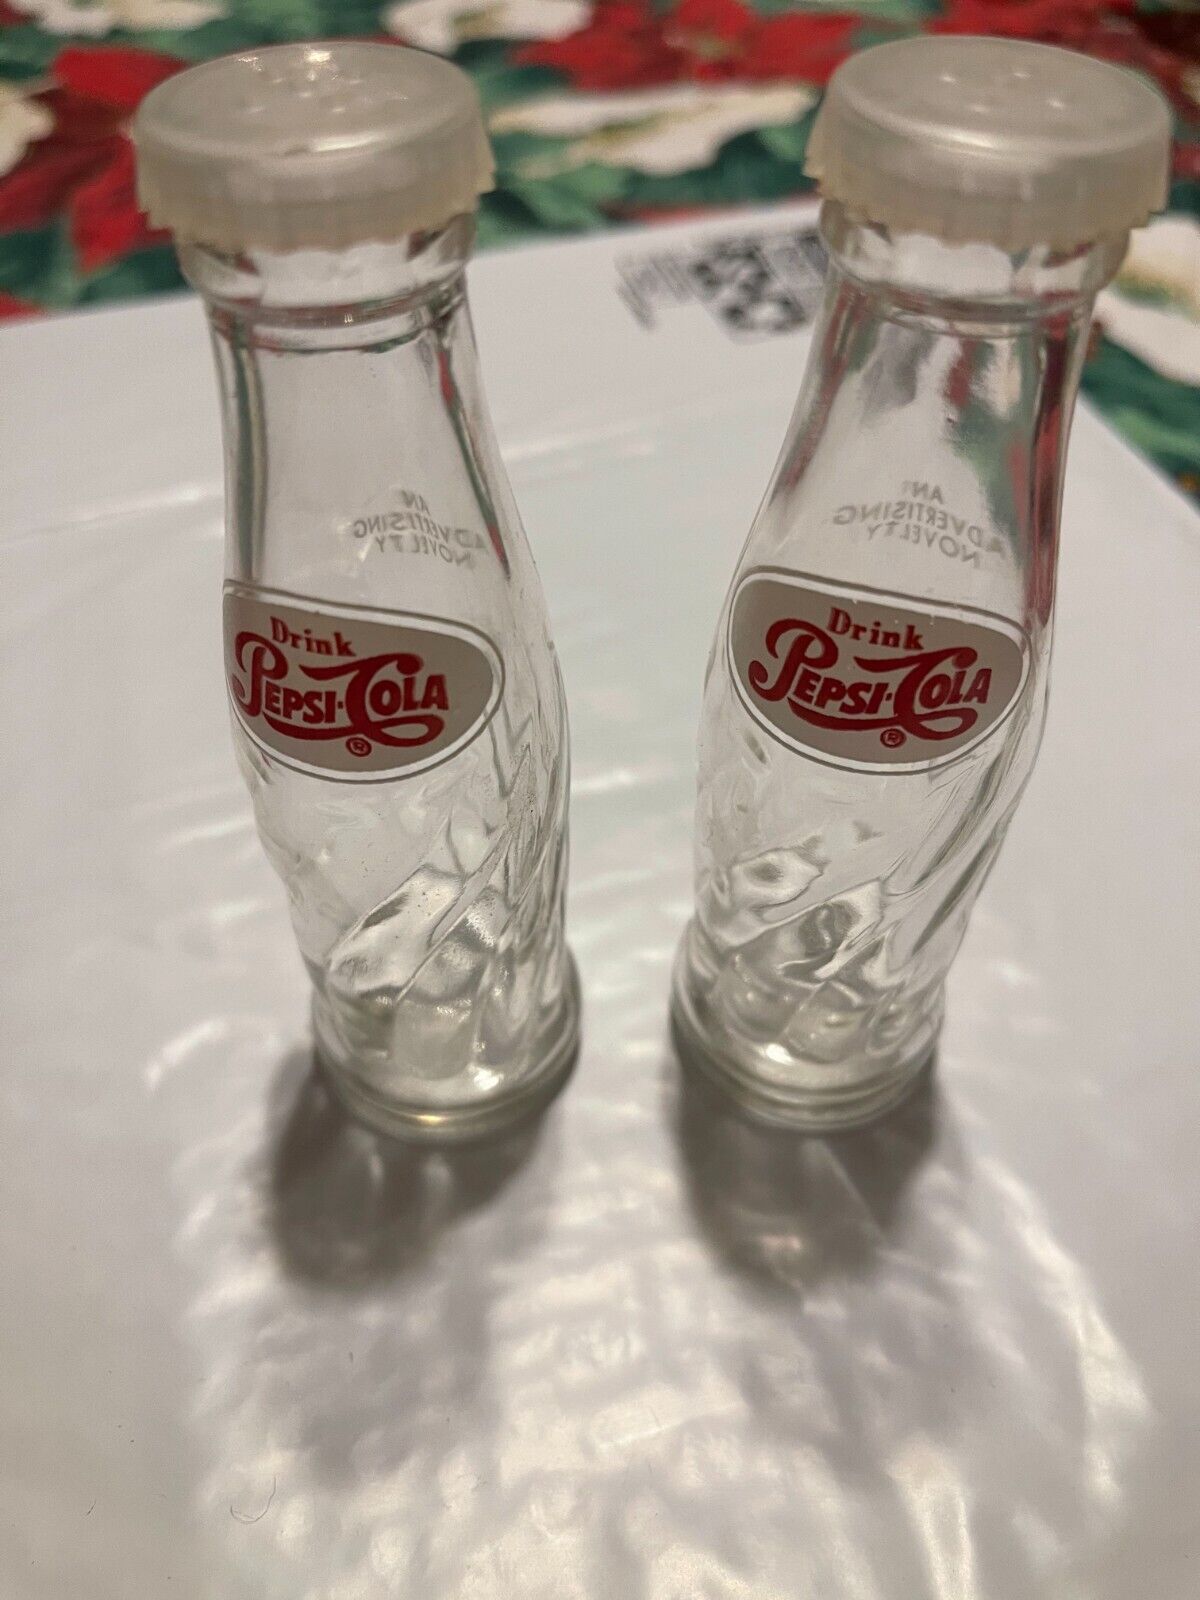 Vintage Drink Pepsi Cola Salt & Pepper Shakers